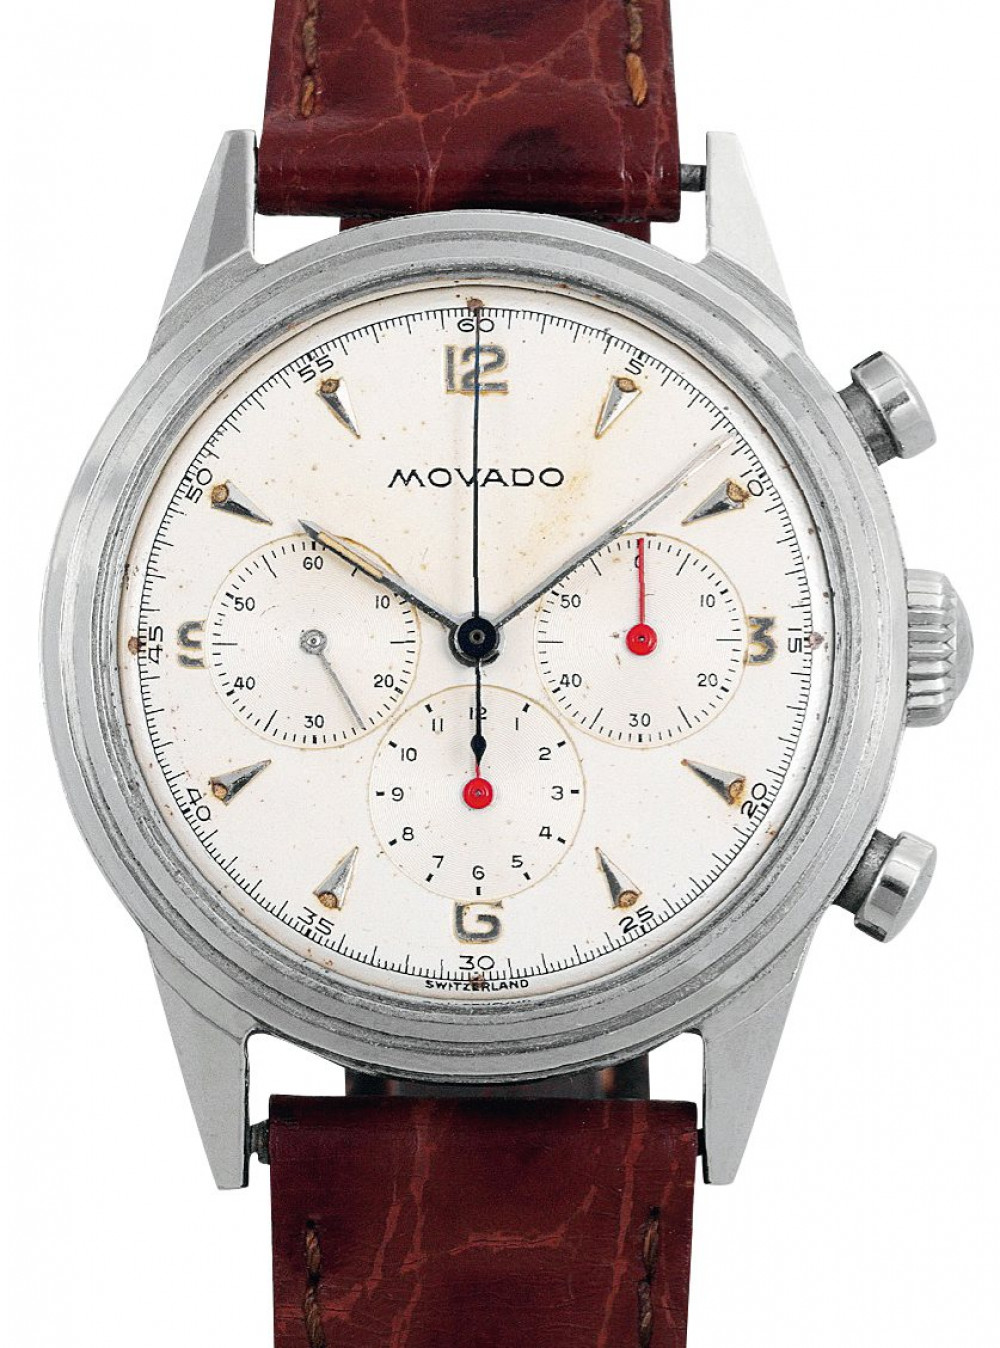 Zegarek firmy Movado, model Chronograph von ca. 1960